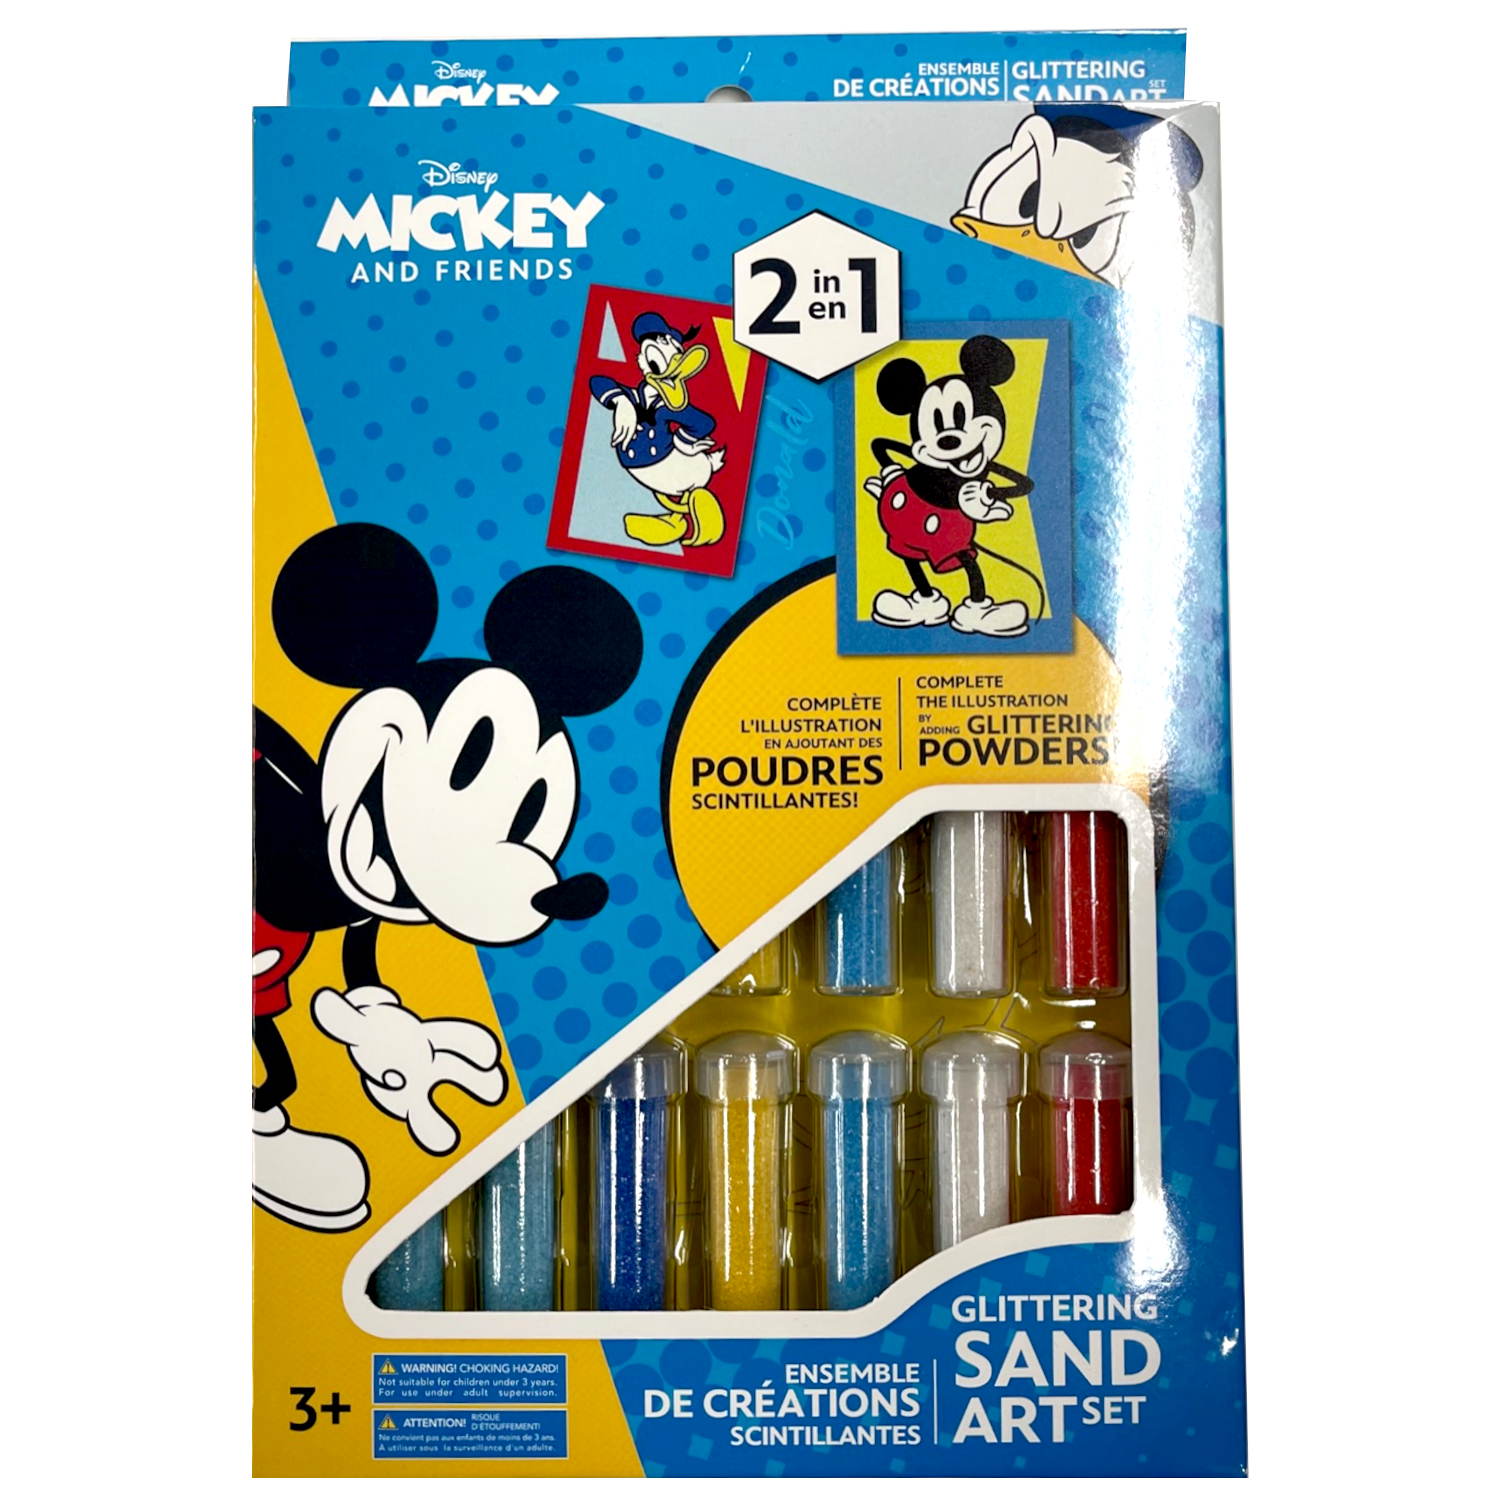 2-In-1 Glittering Sand Art Set - Disney Princess 